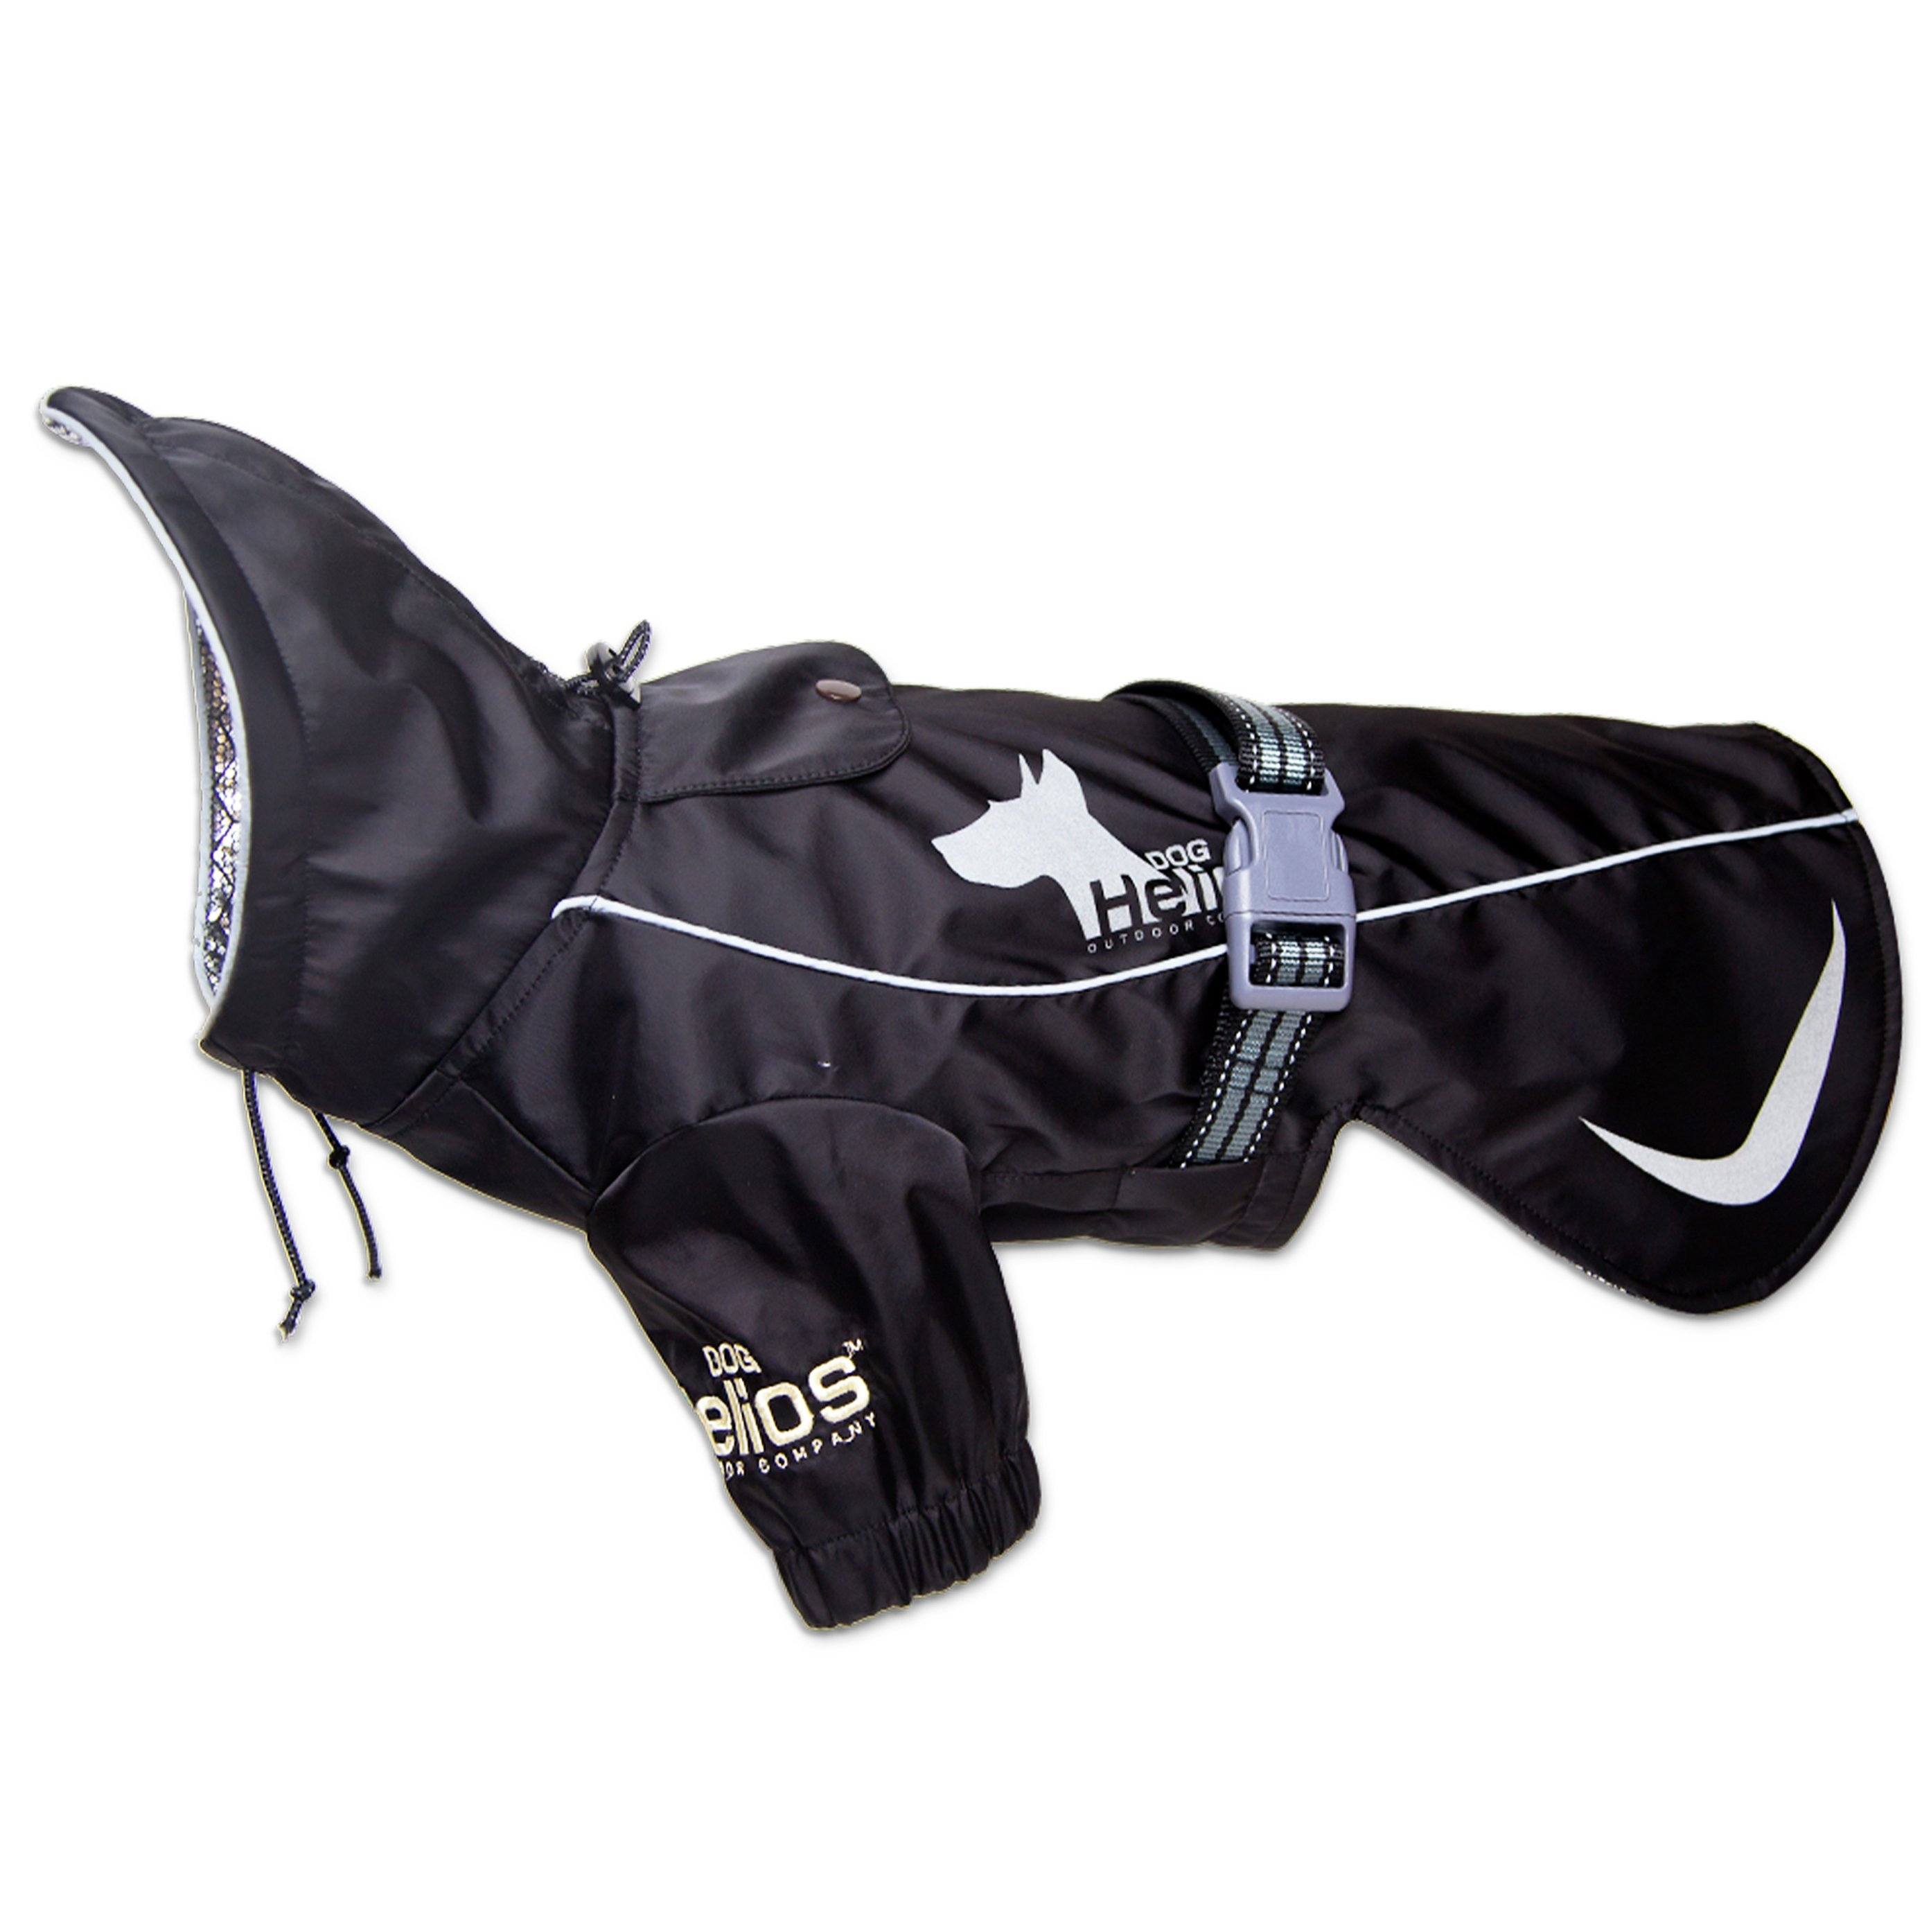 Dog Helios 'Ice-Breaker' Extendable Hooded Dog Coat w/ Heat Reflective Technology X-Small Black